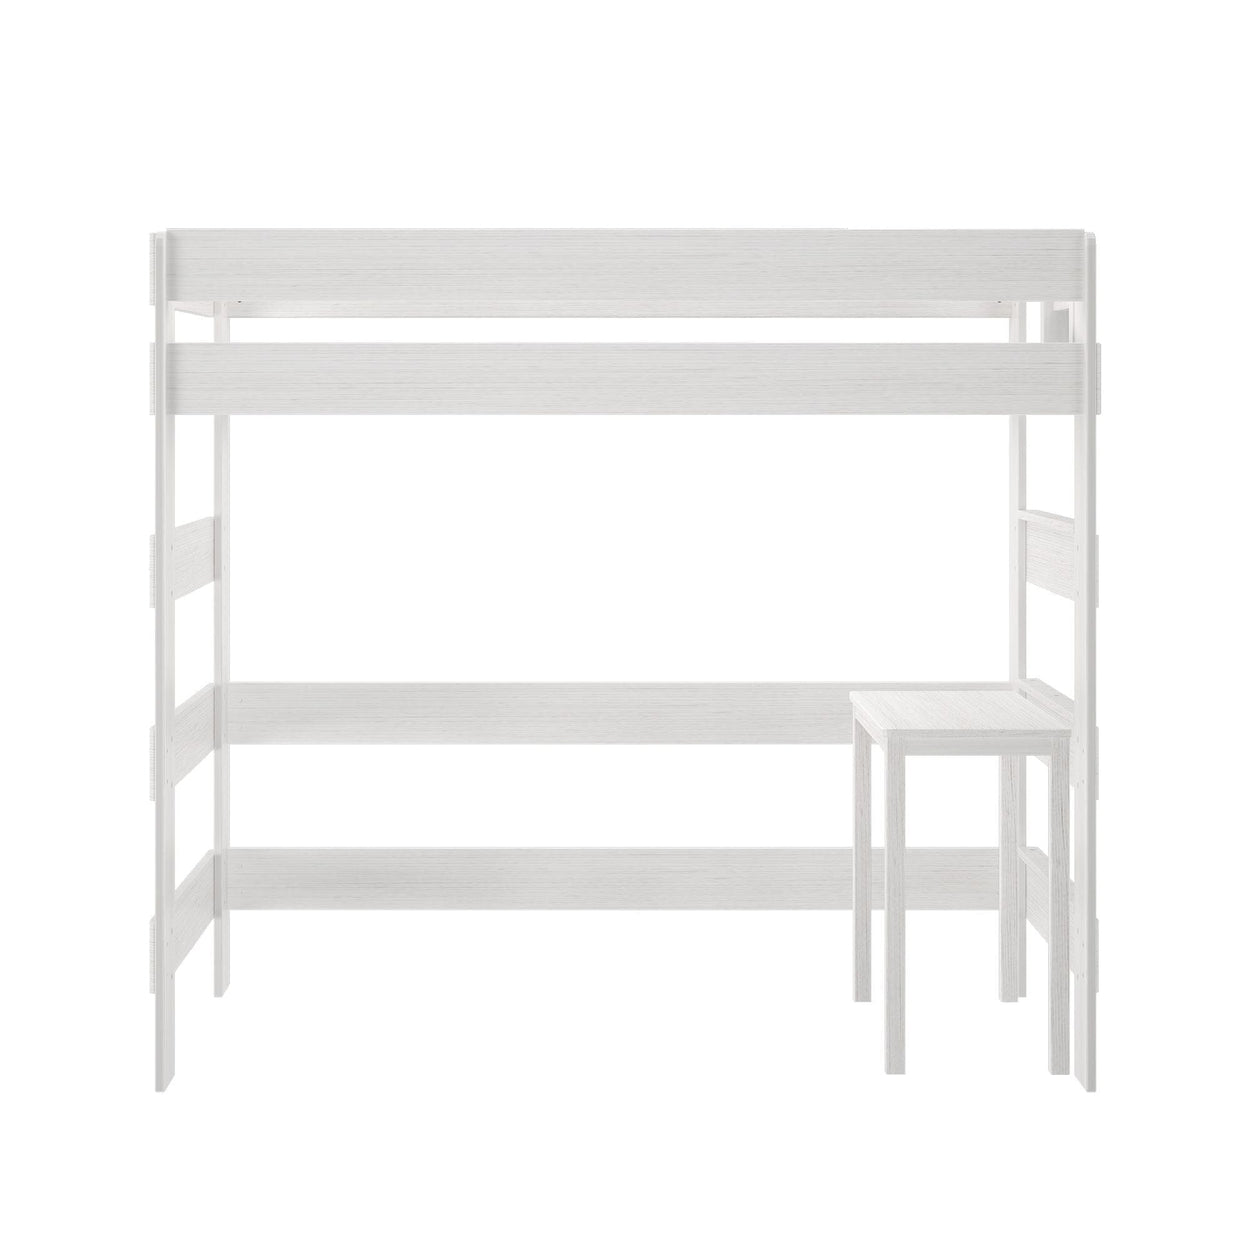 195227-182 : Loft Beds Farmhouse High Loft Bed With Desk, White Wash